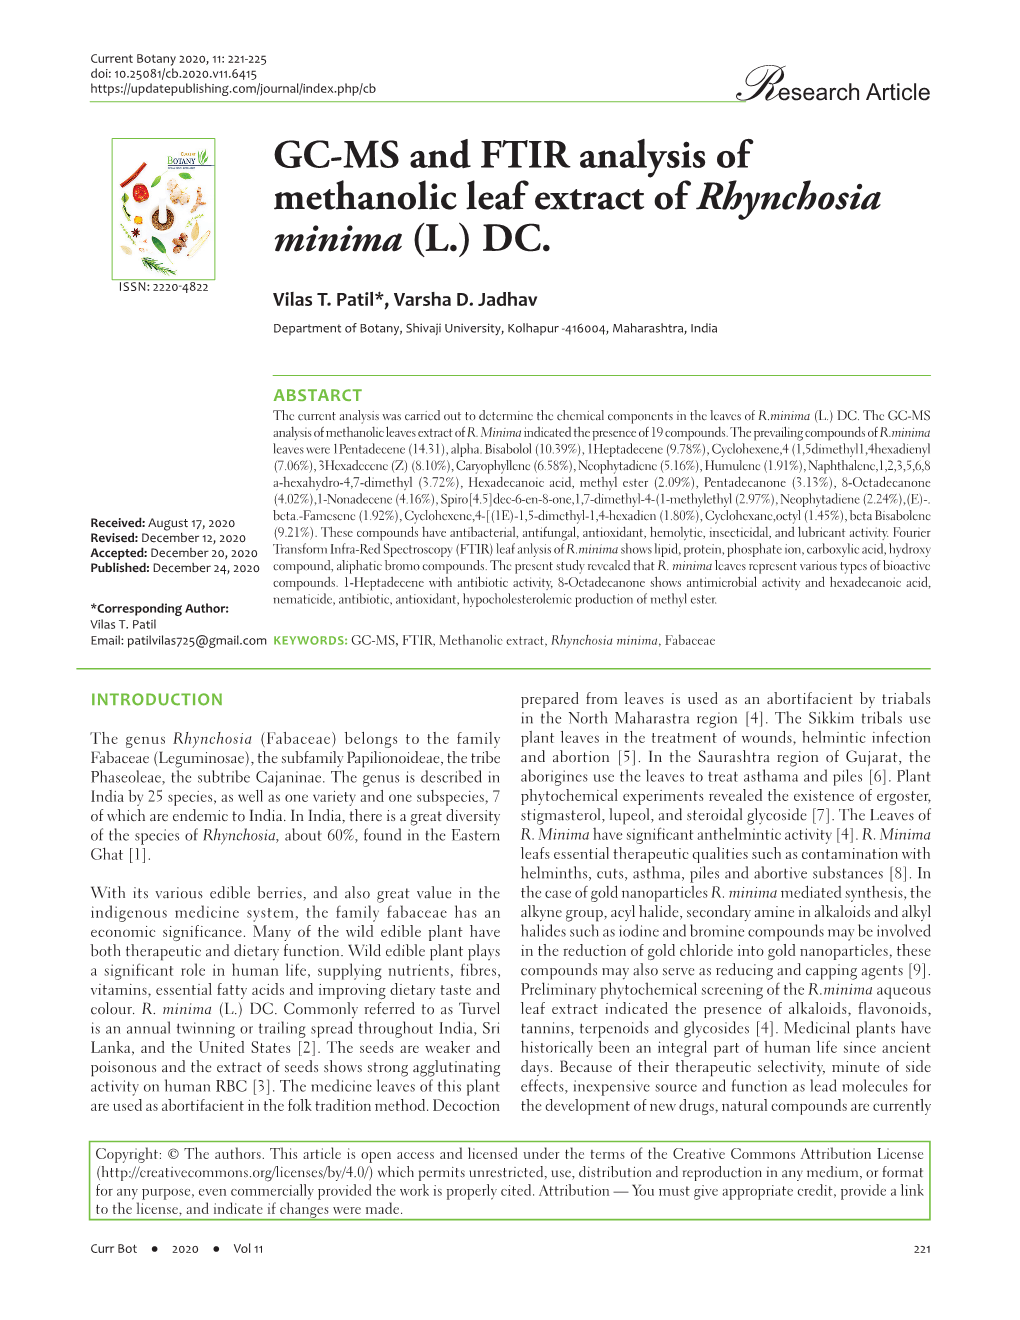 GC-MS and FTIR Analysis of Methanolic Leaf Extract of Rhynchosia Minima (L.) DC